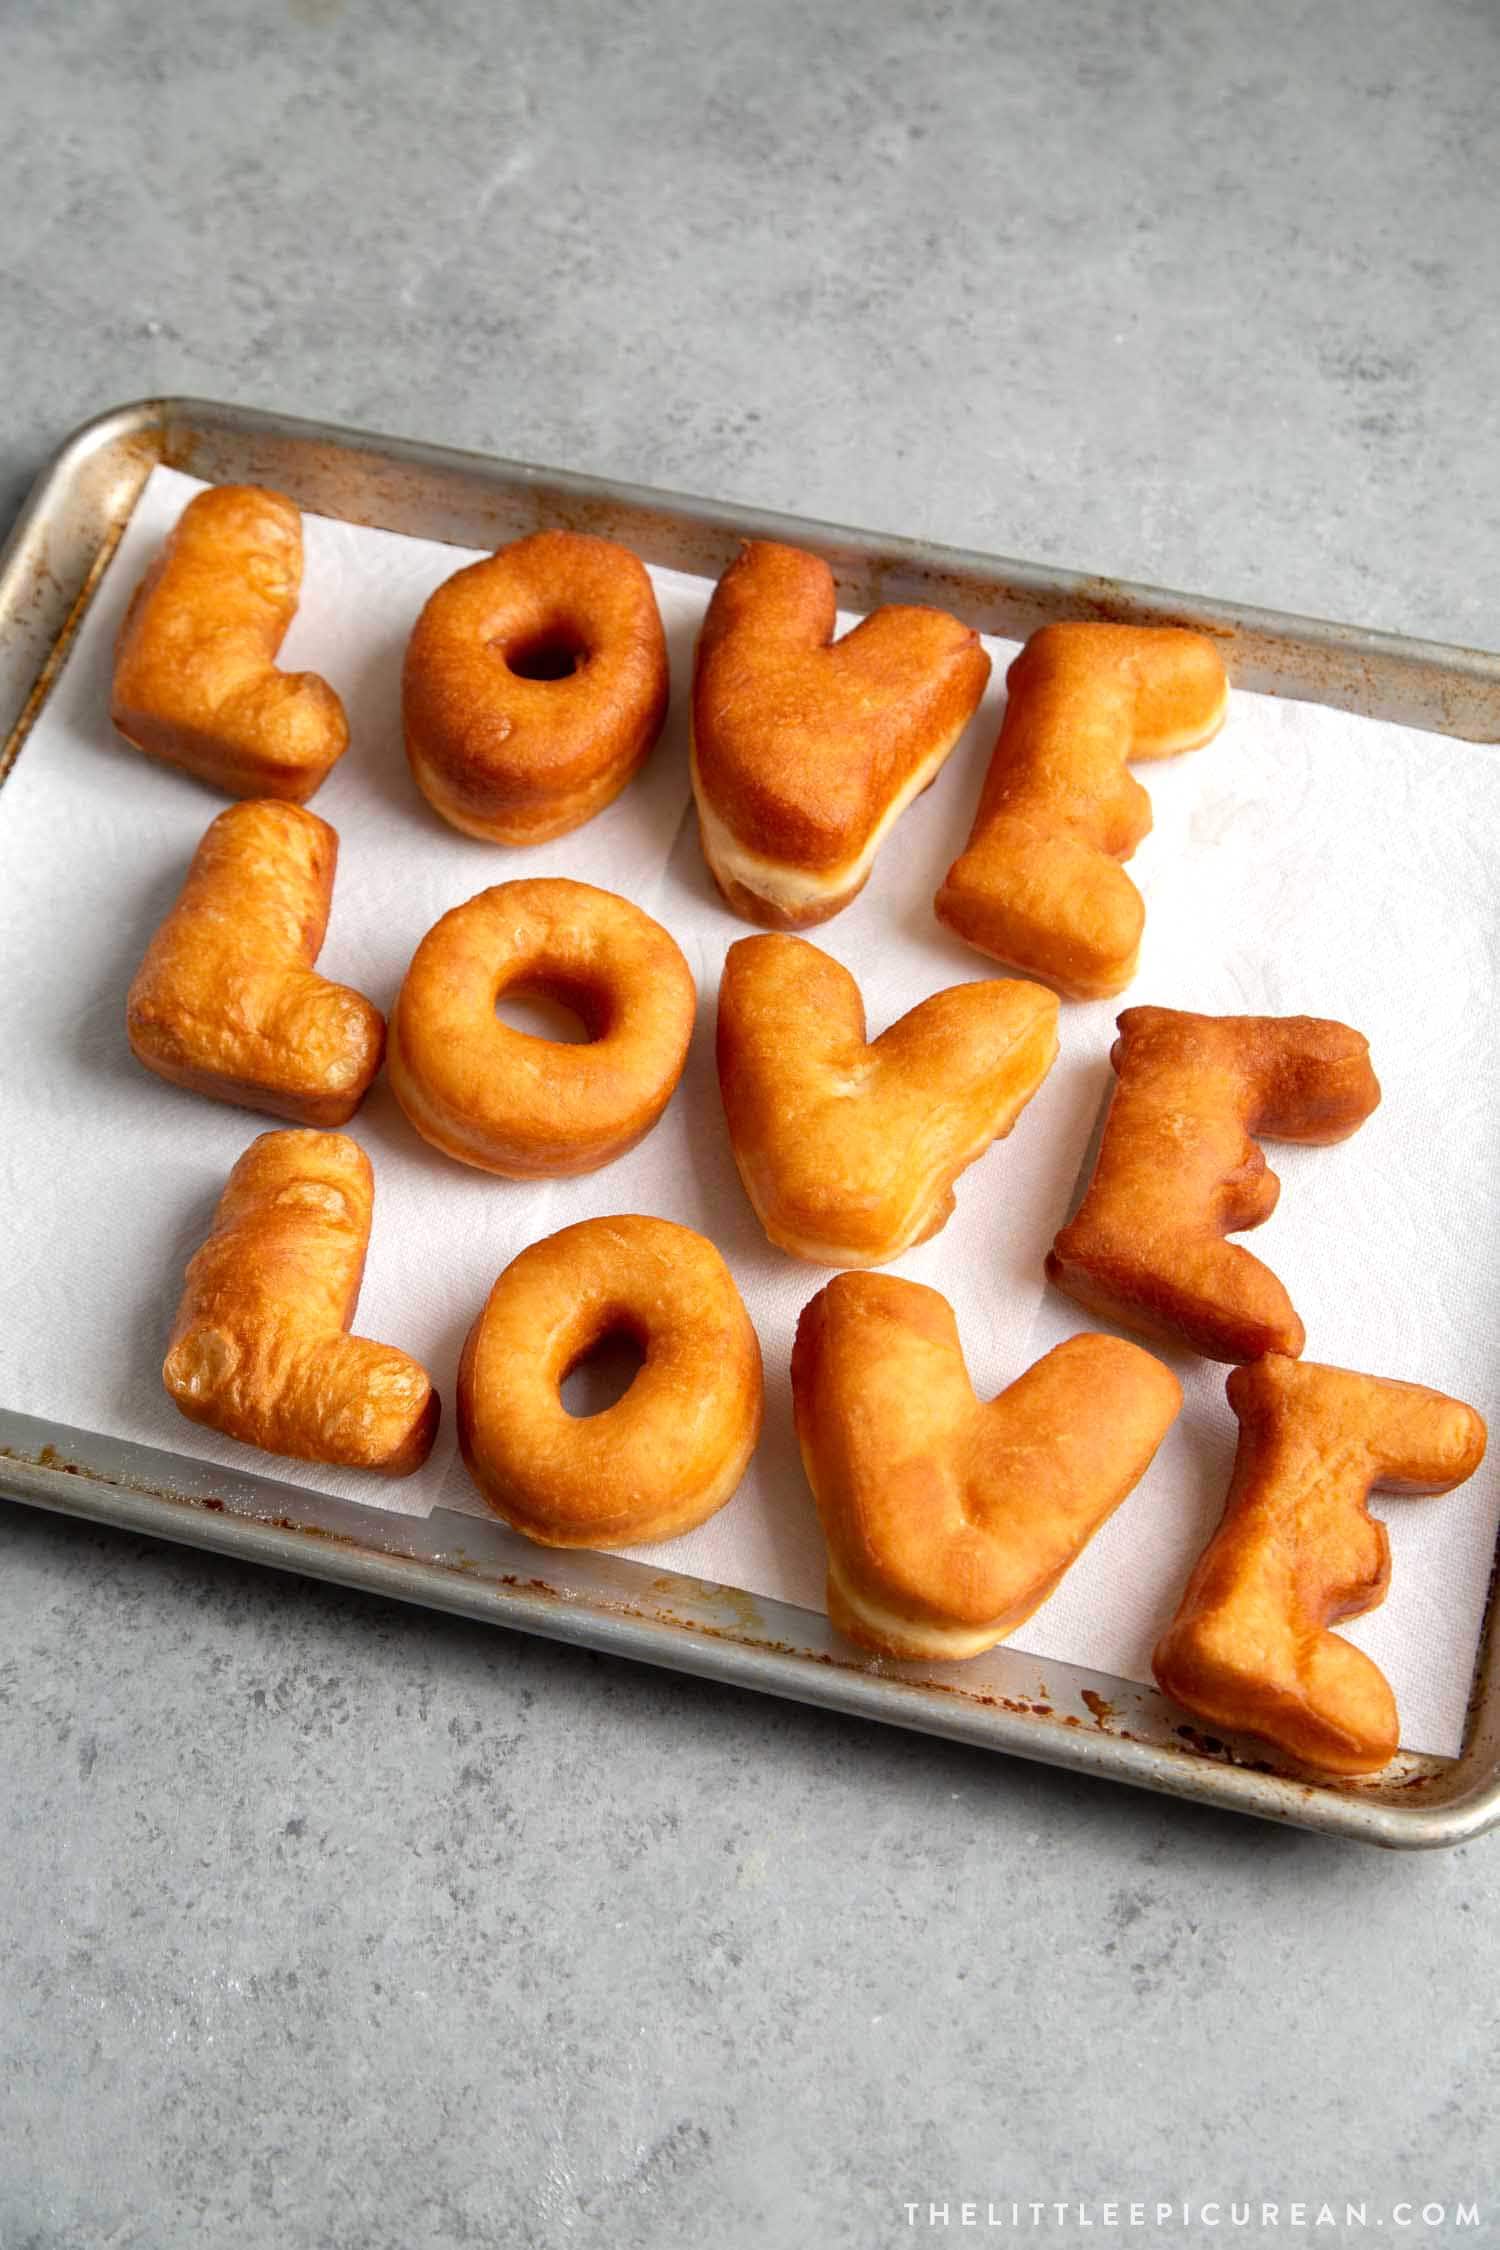 Glazed Letter Donuts with Sprinkles - The Little Epicurean